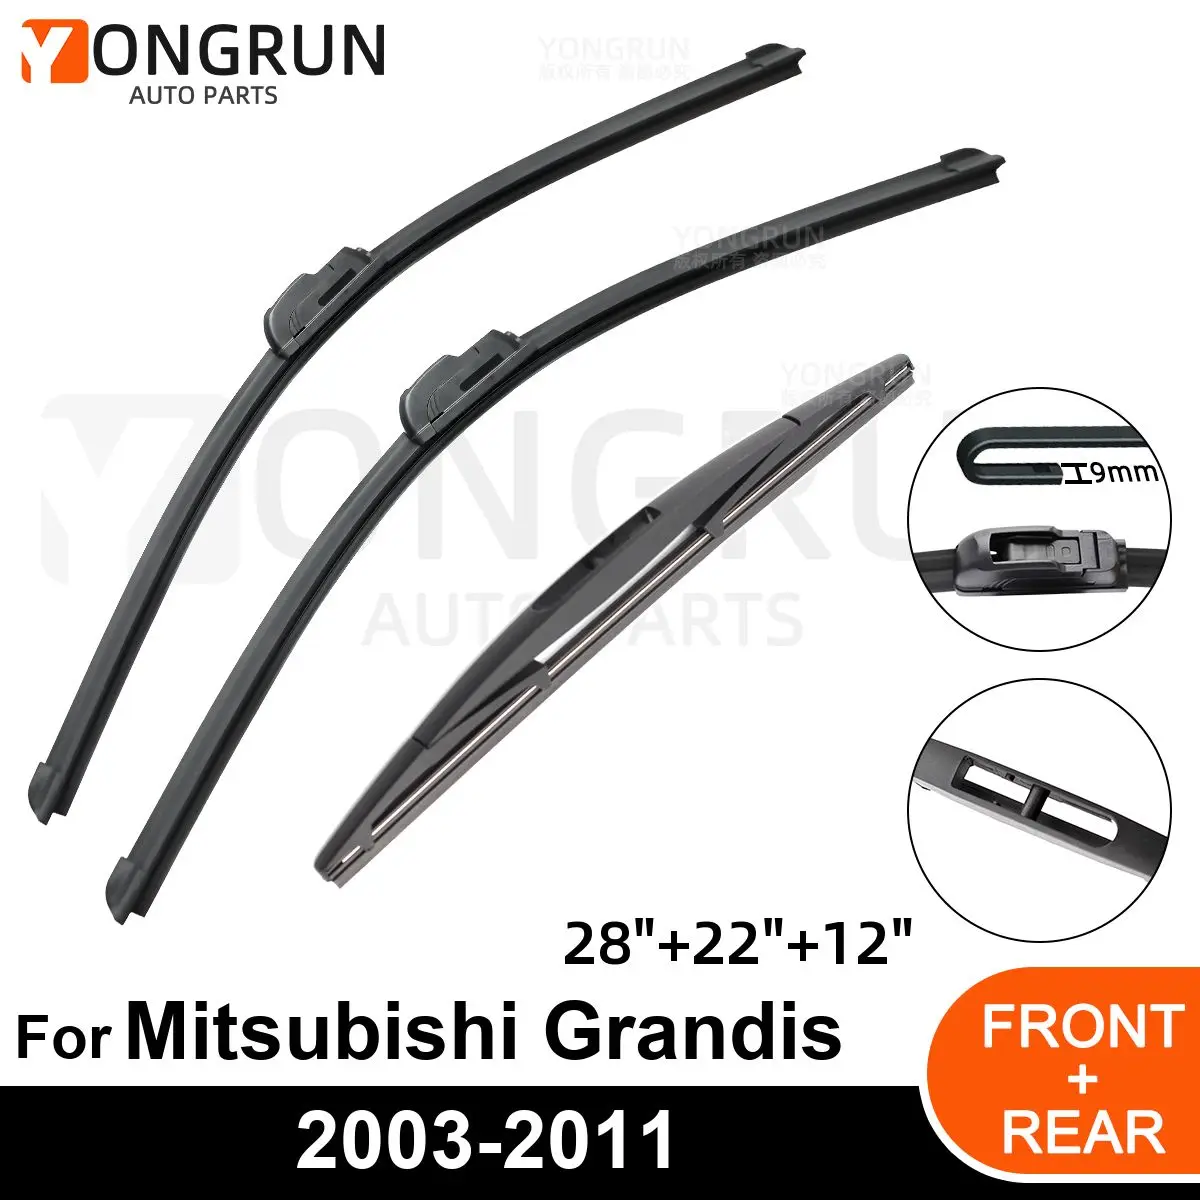 

Car Windshield Windscreen Front Rear Wiper Blade Rubber Accessories For Mitsubishi Grandis 28" 22" 12" 2003-2008 2009 2010 2011